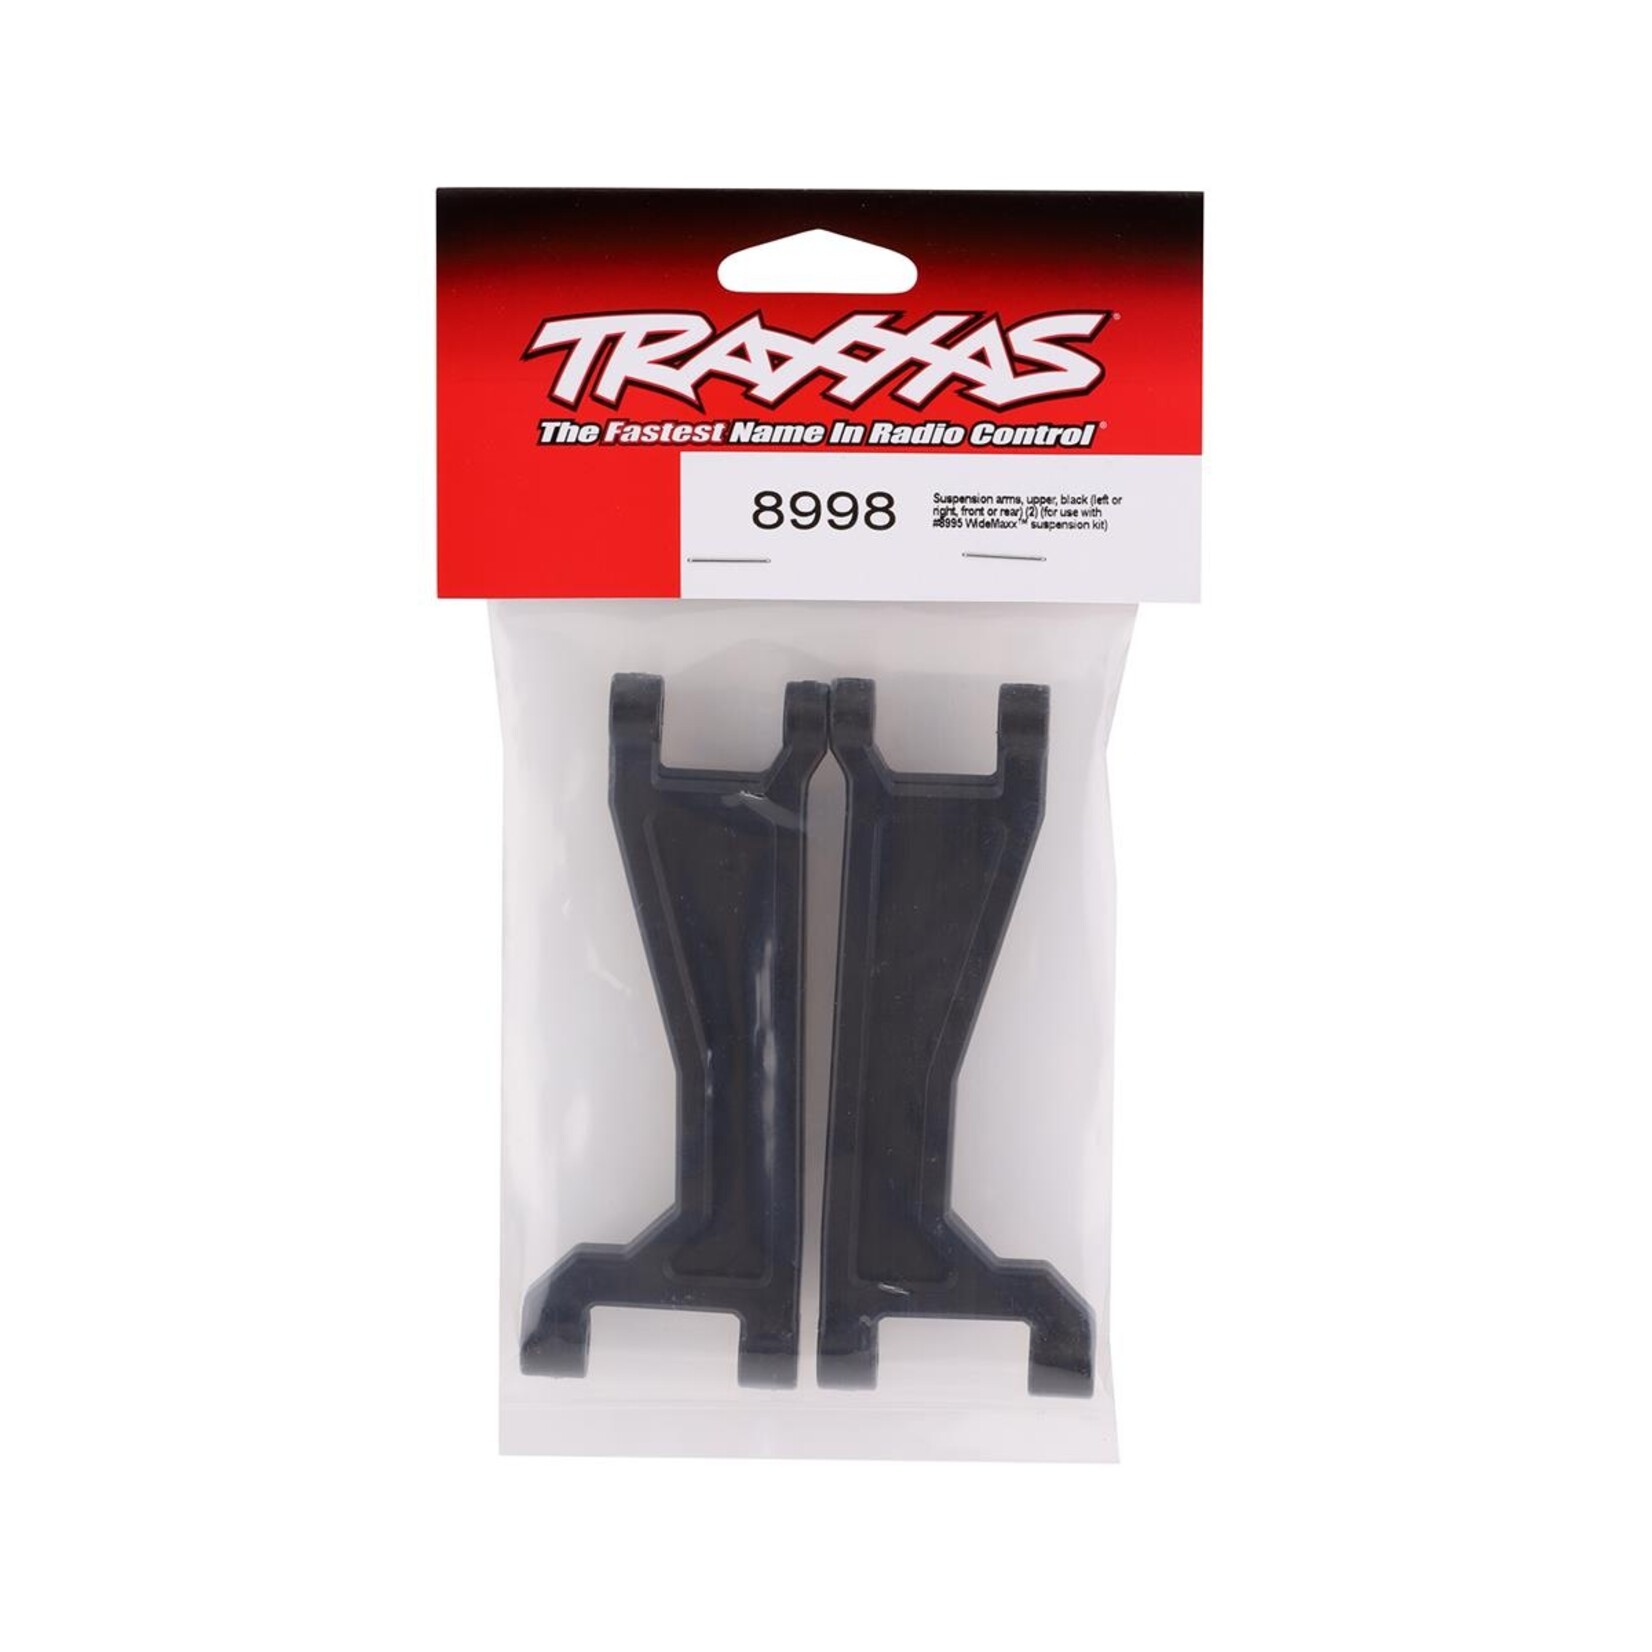 Traxxas Traxxas Maxx WideMaxx Upper Suspension Arms (Black) (2) #8998